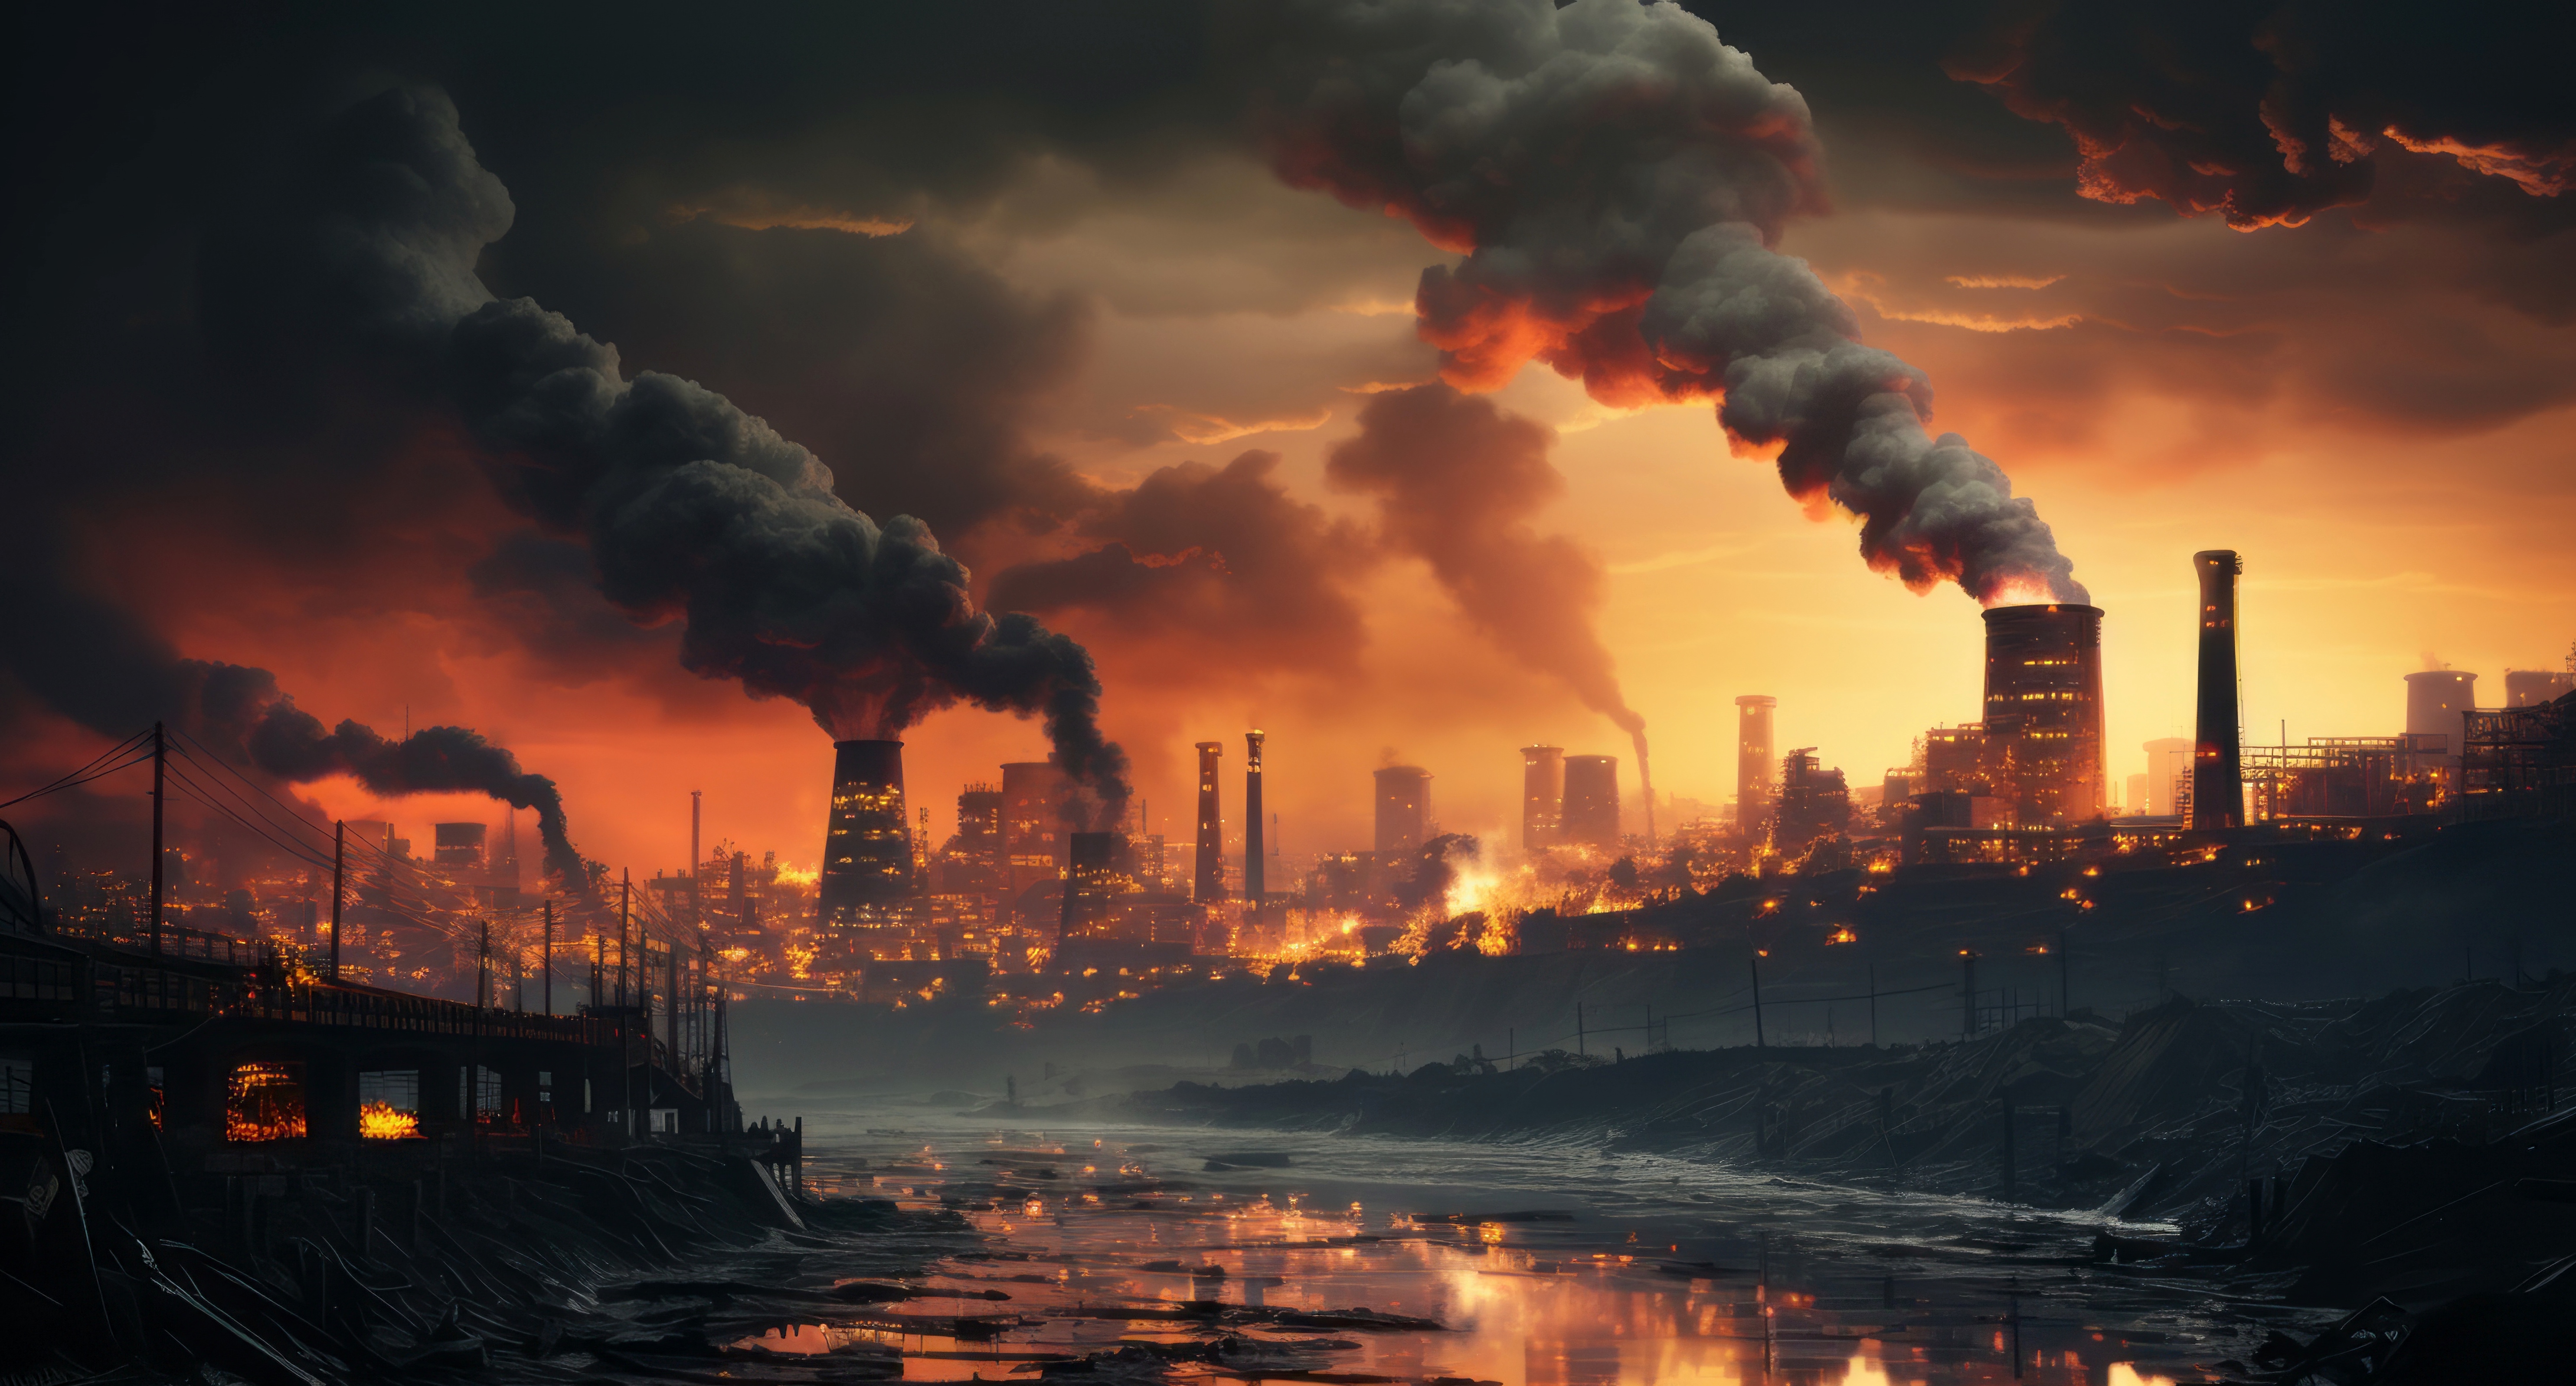 Pollution atmosphérique massive d'origine humaine. © senadesign, Adobe Stock